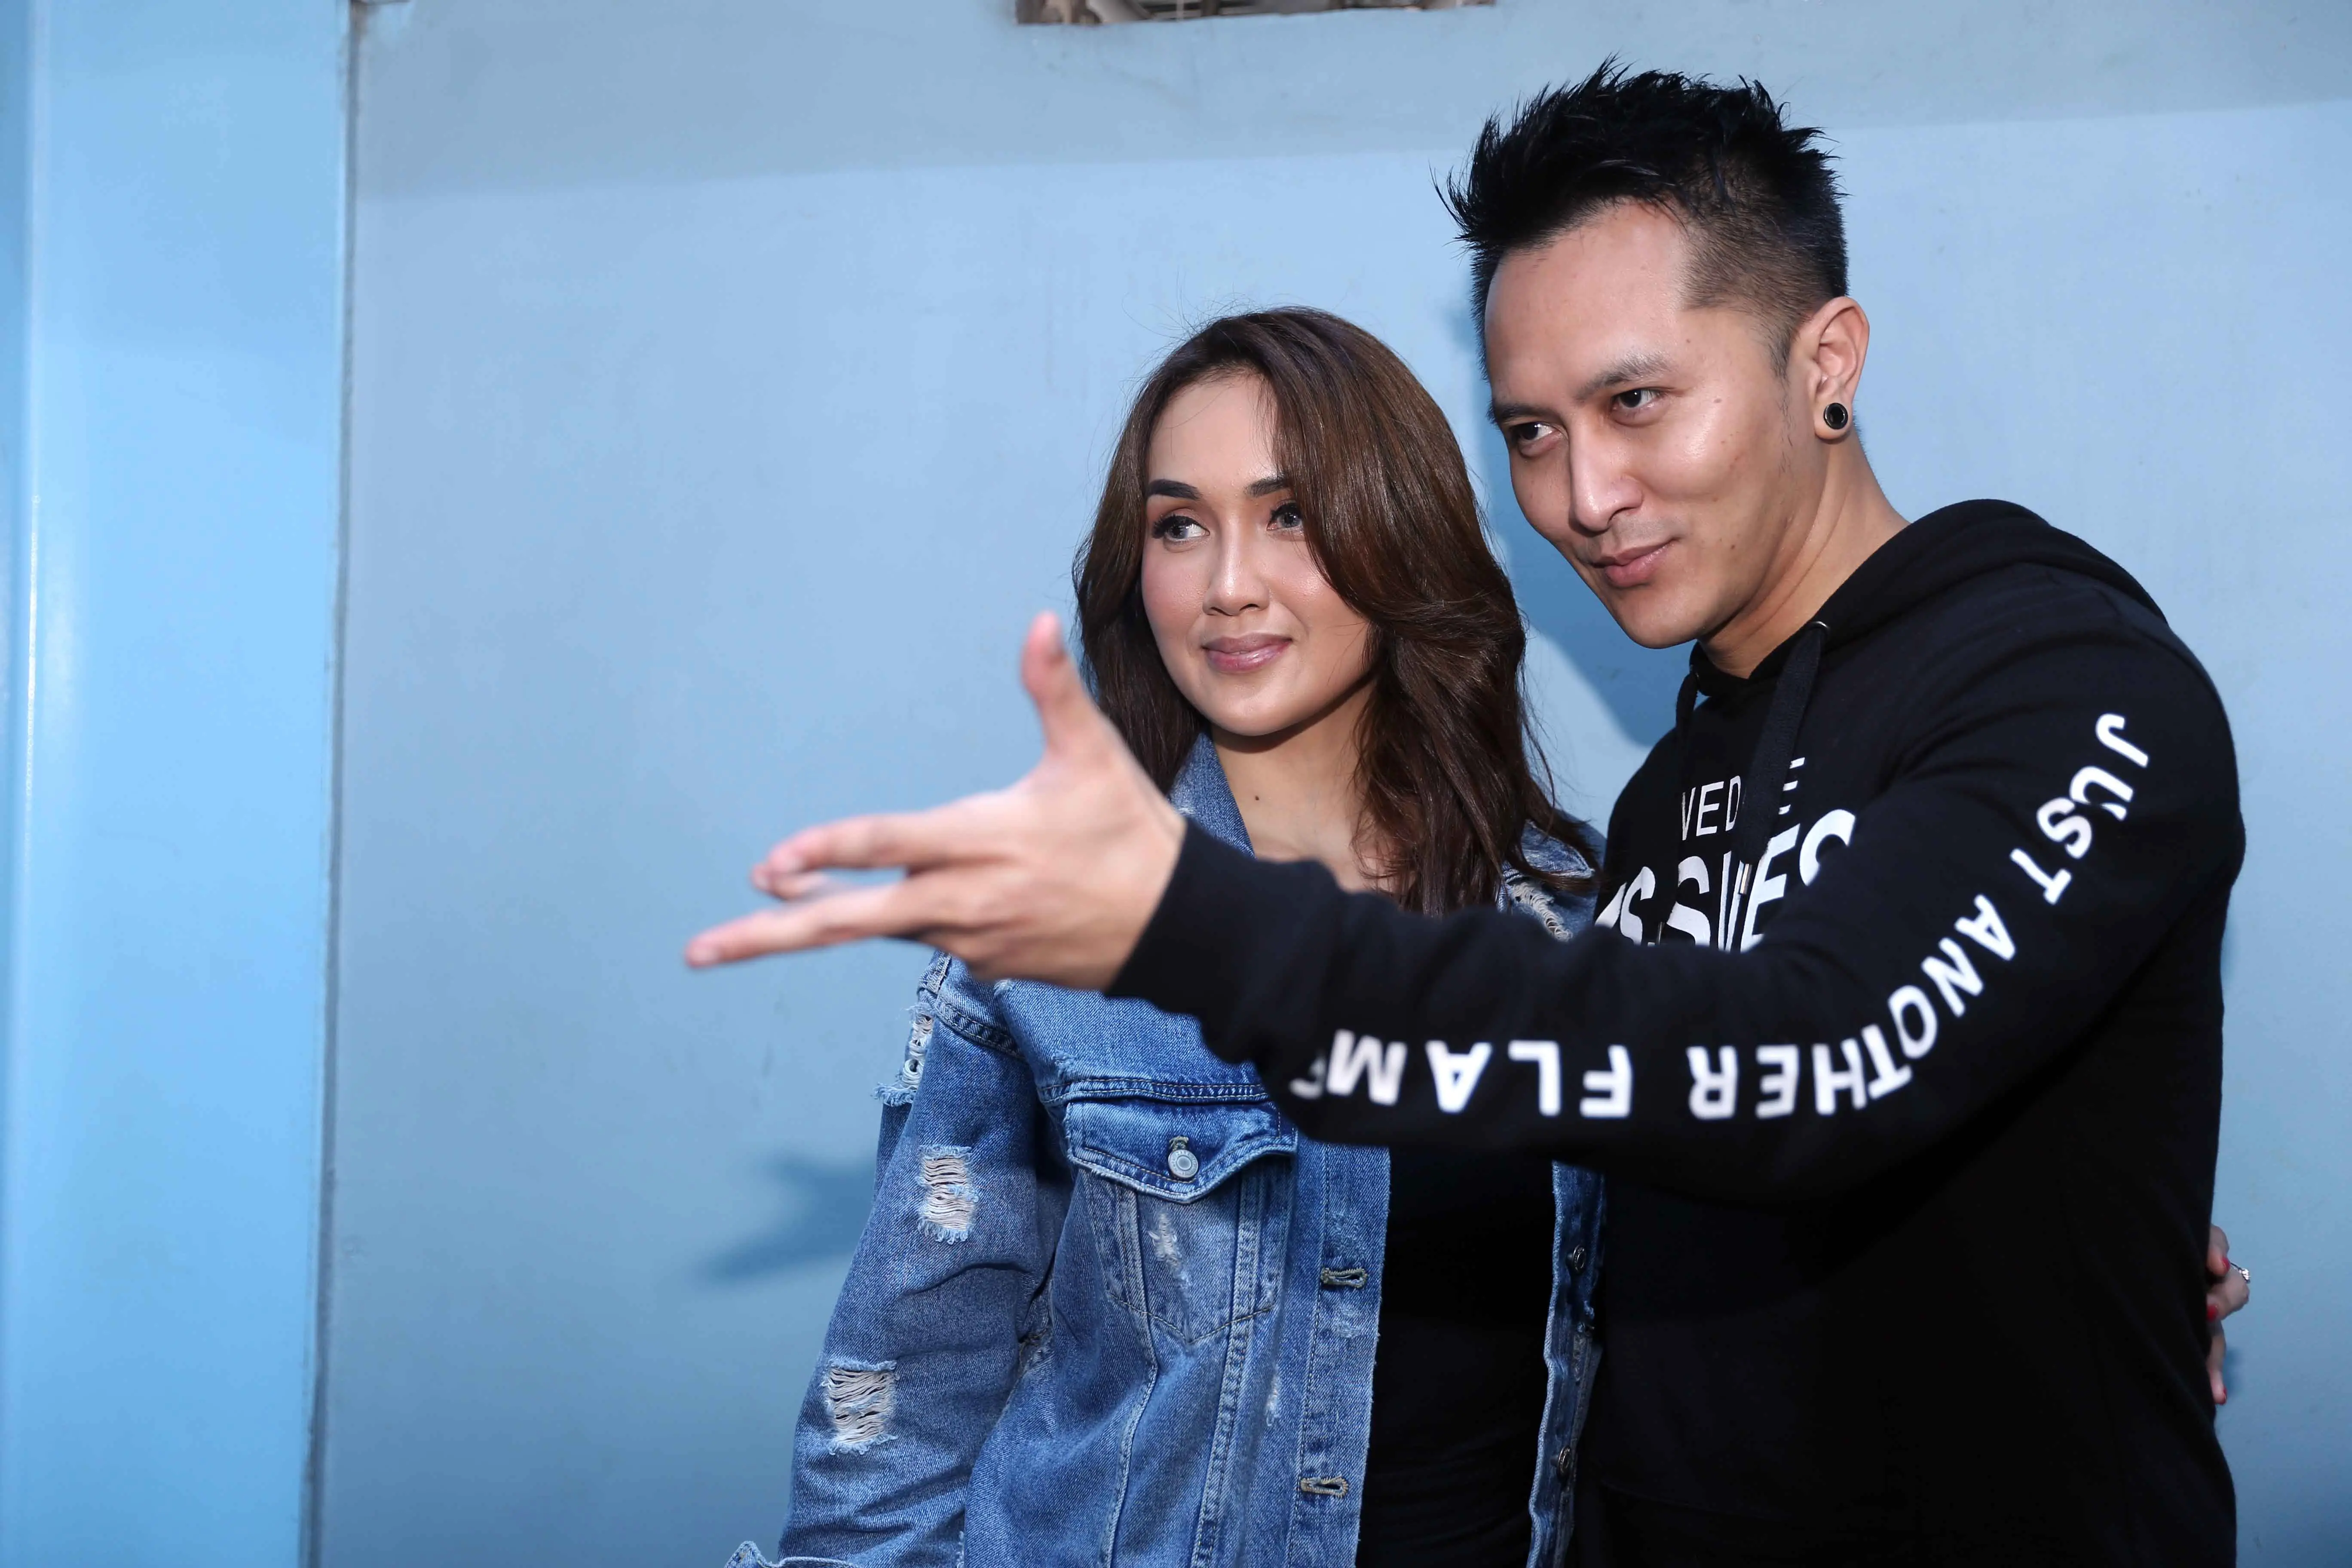 Demian Aditya dan Sara Wijayanto. (Nurwahyunan/Bintang.com)